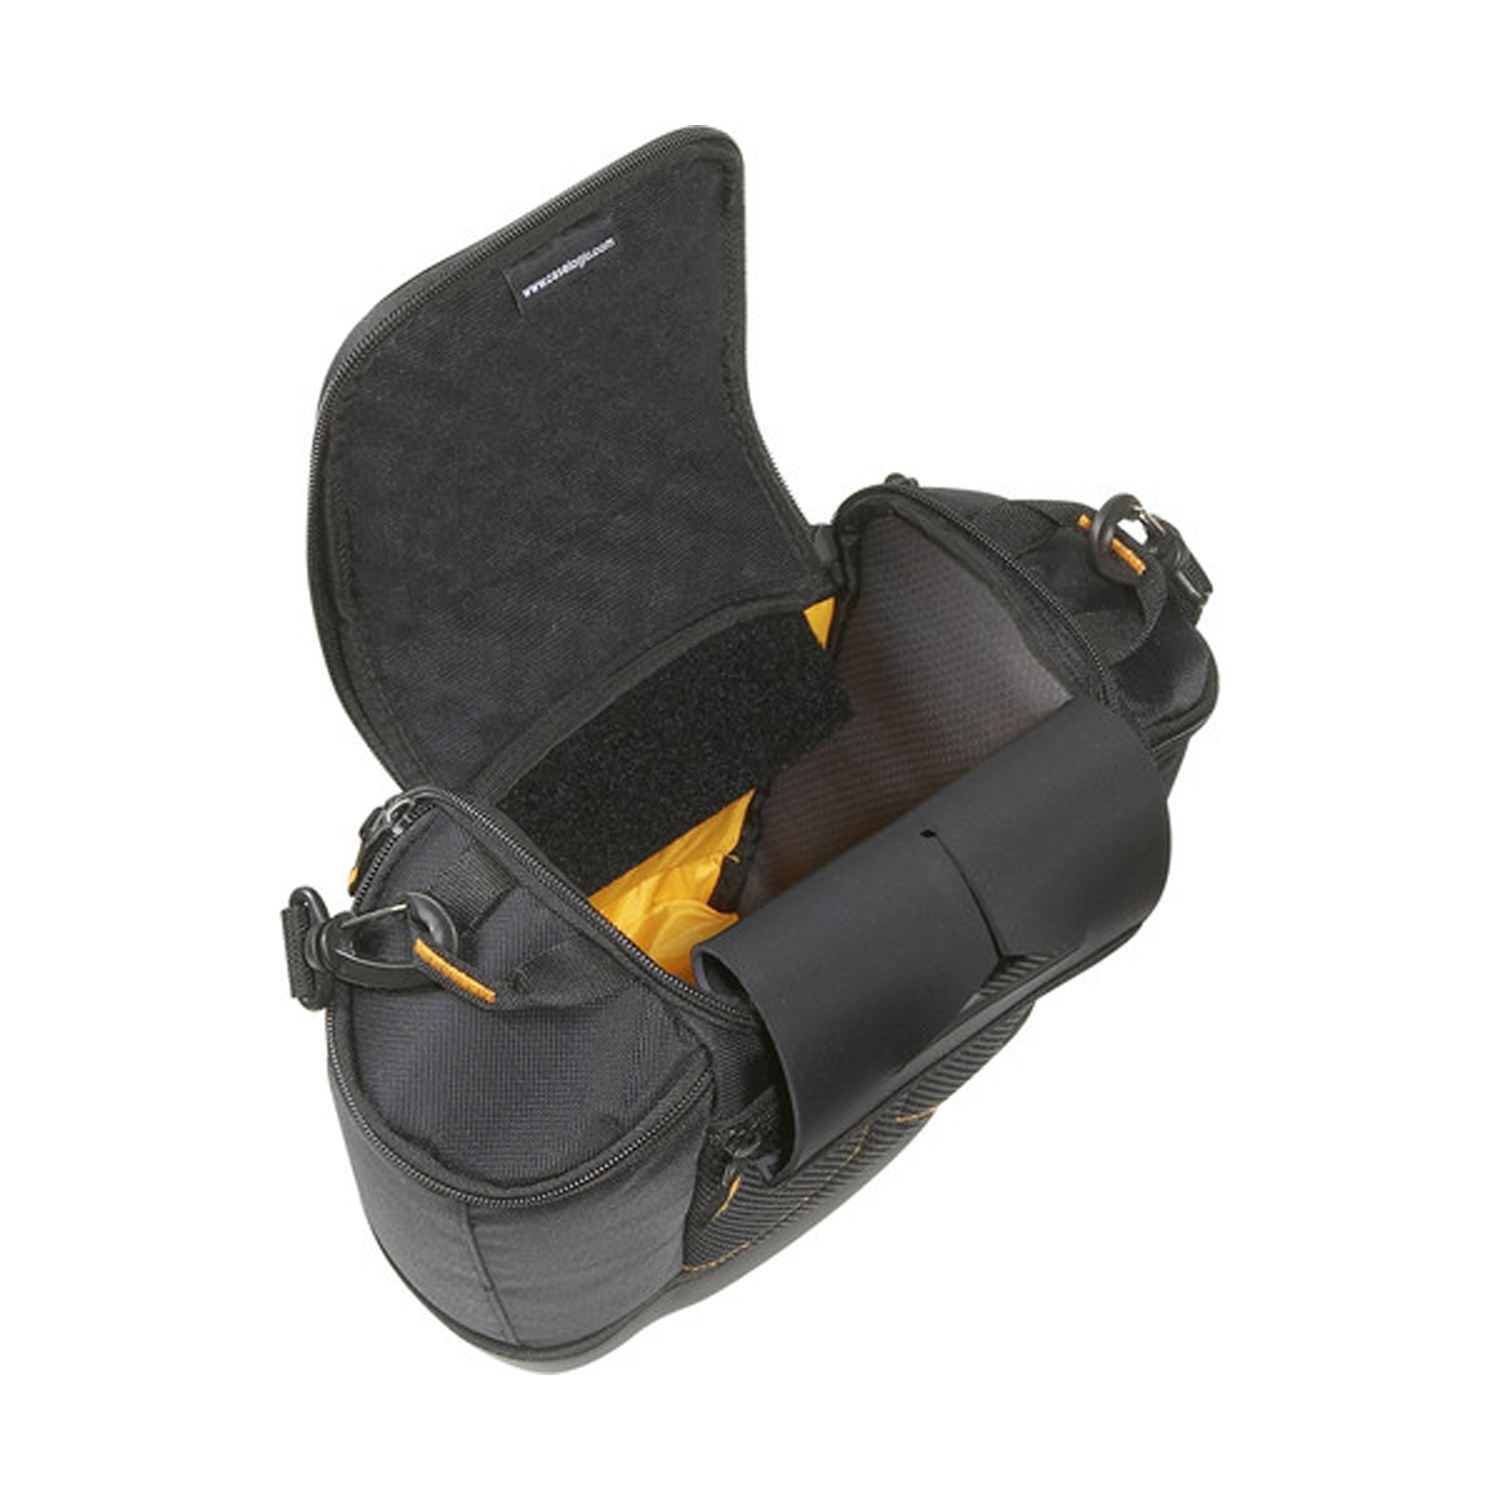 Case Logic Medium SLR Camera Bag, Black - image 3 of 5